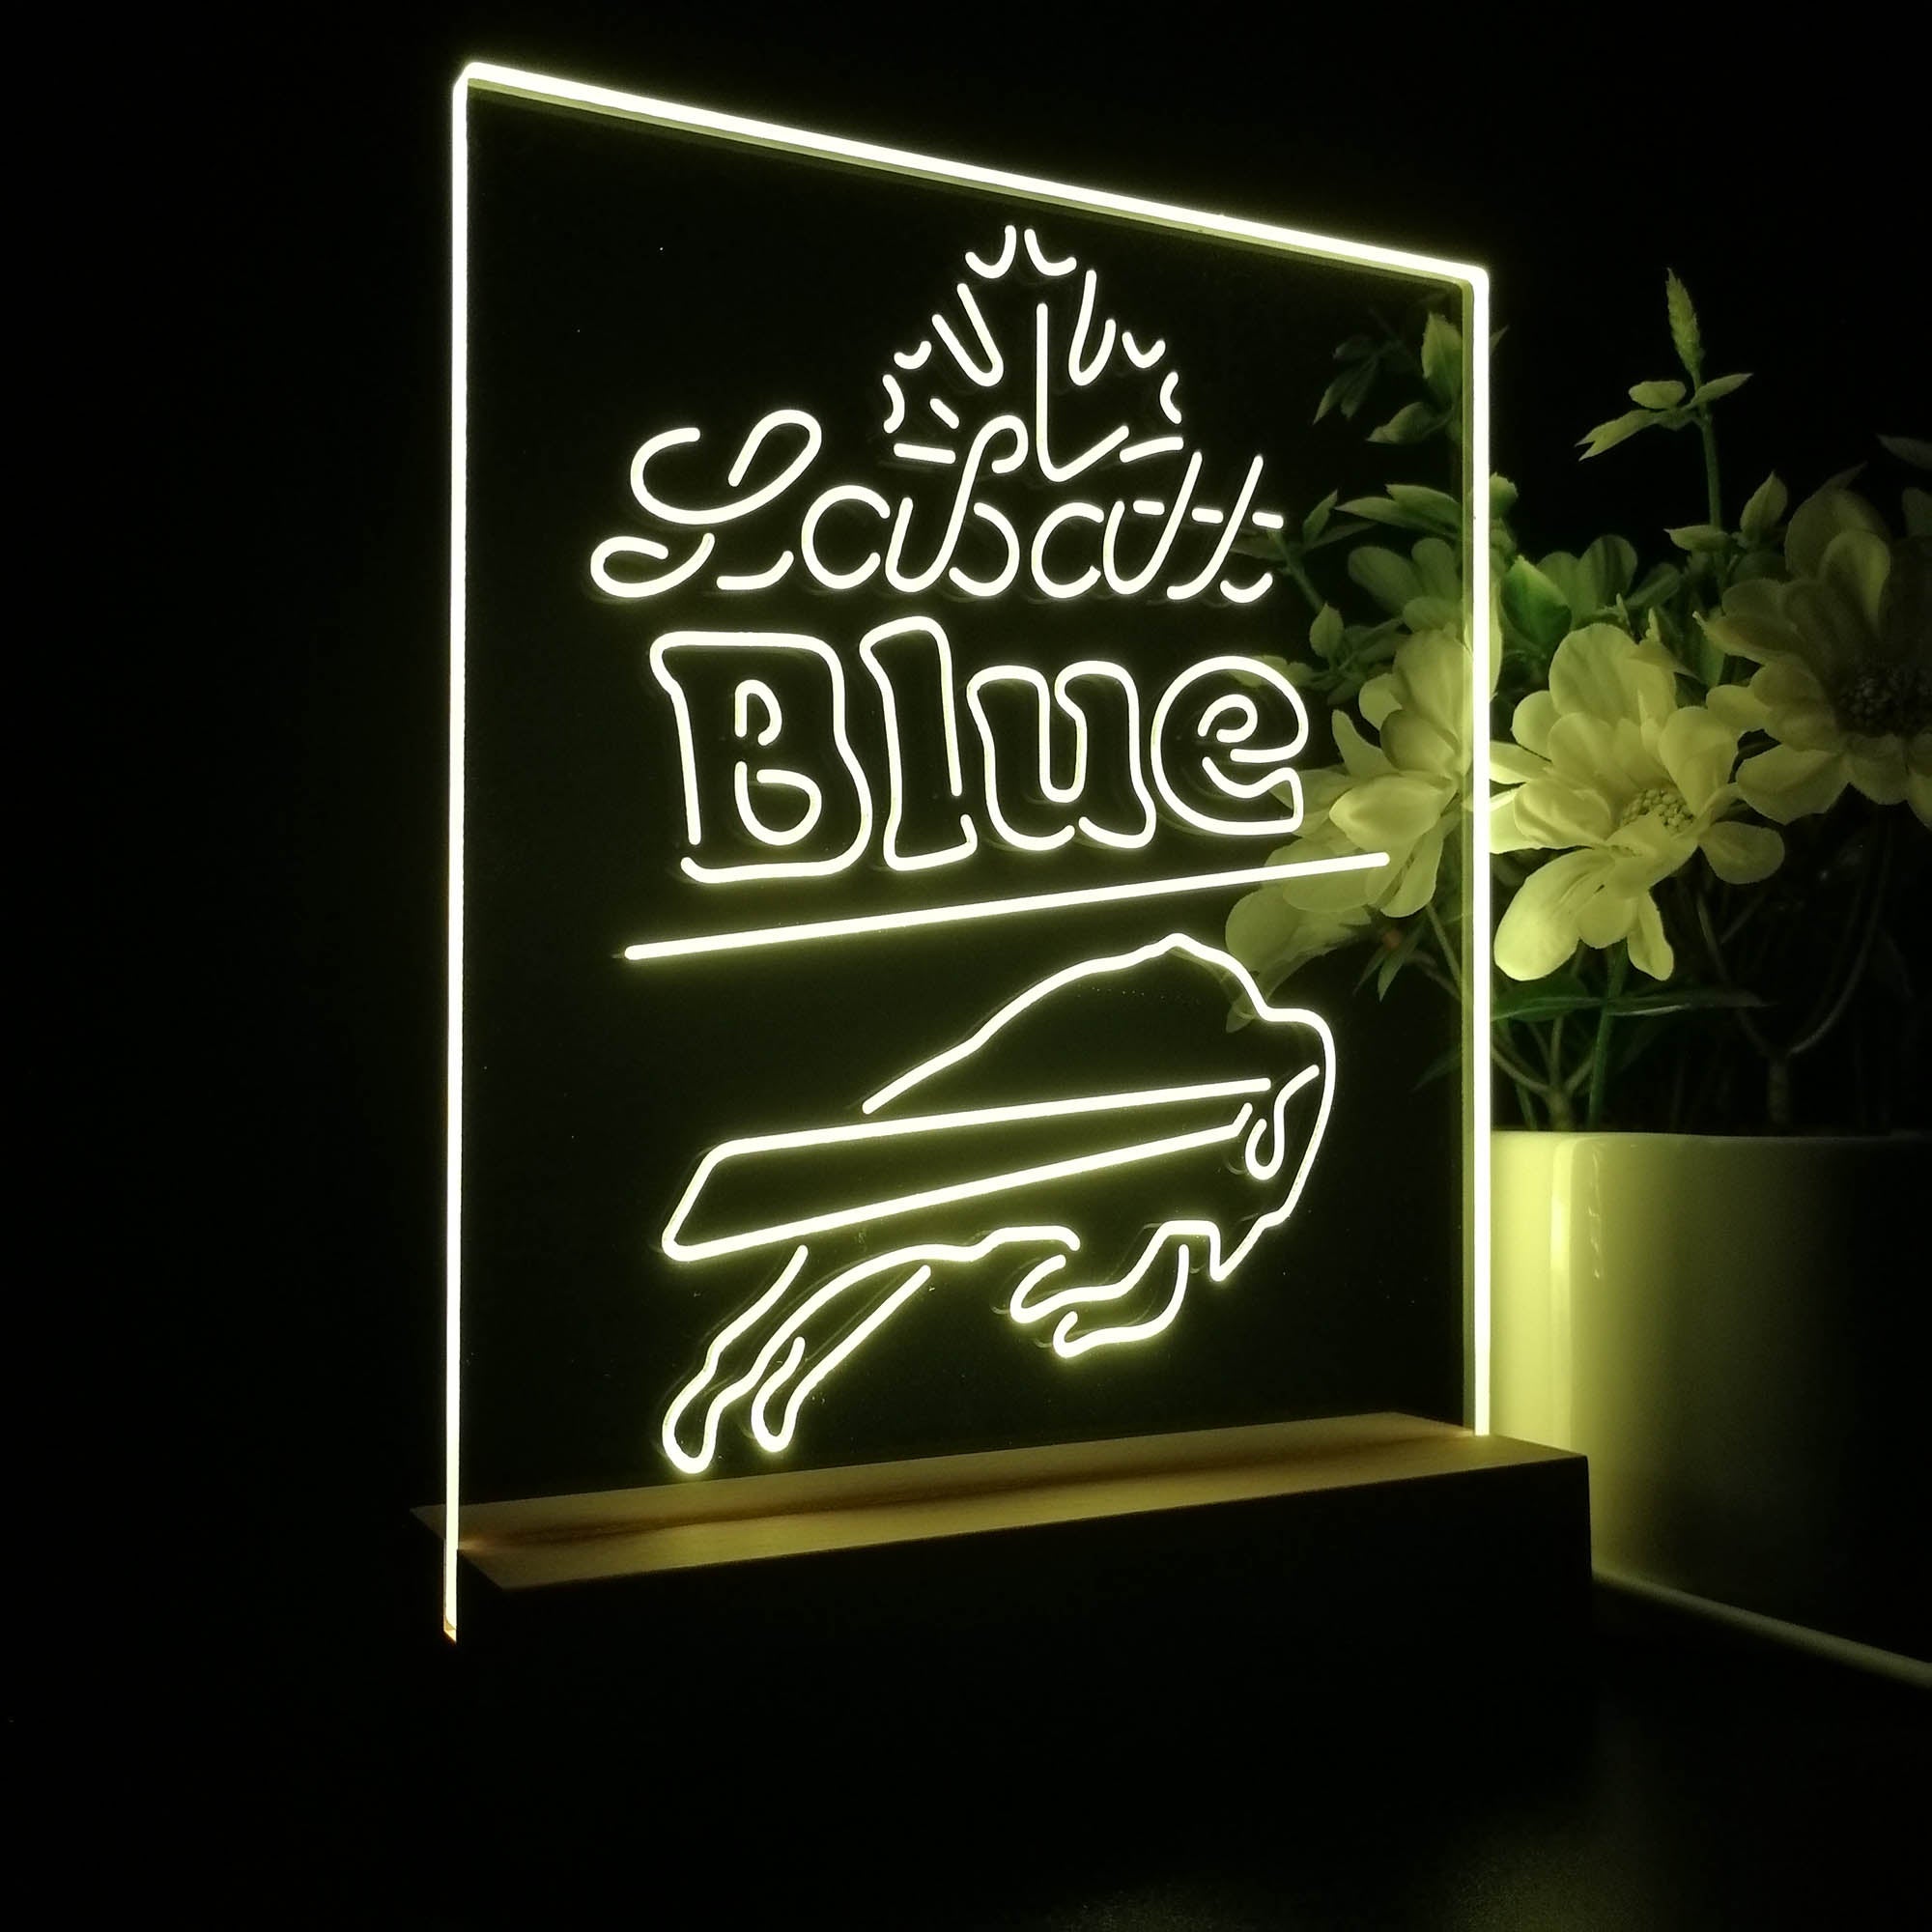 Labatt Blue Buffalo Bills 3D LED Optical Illusion Sport Team Night Light